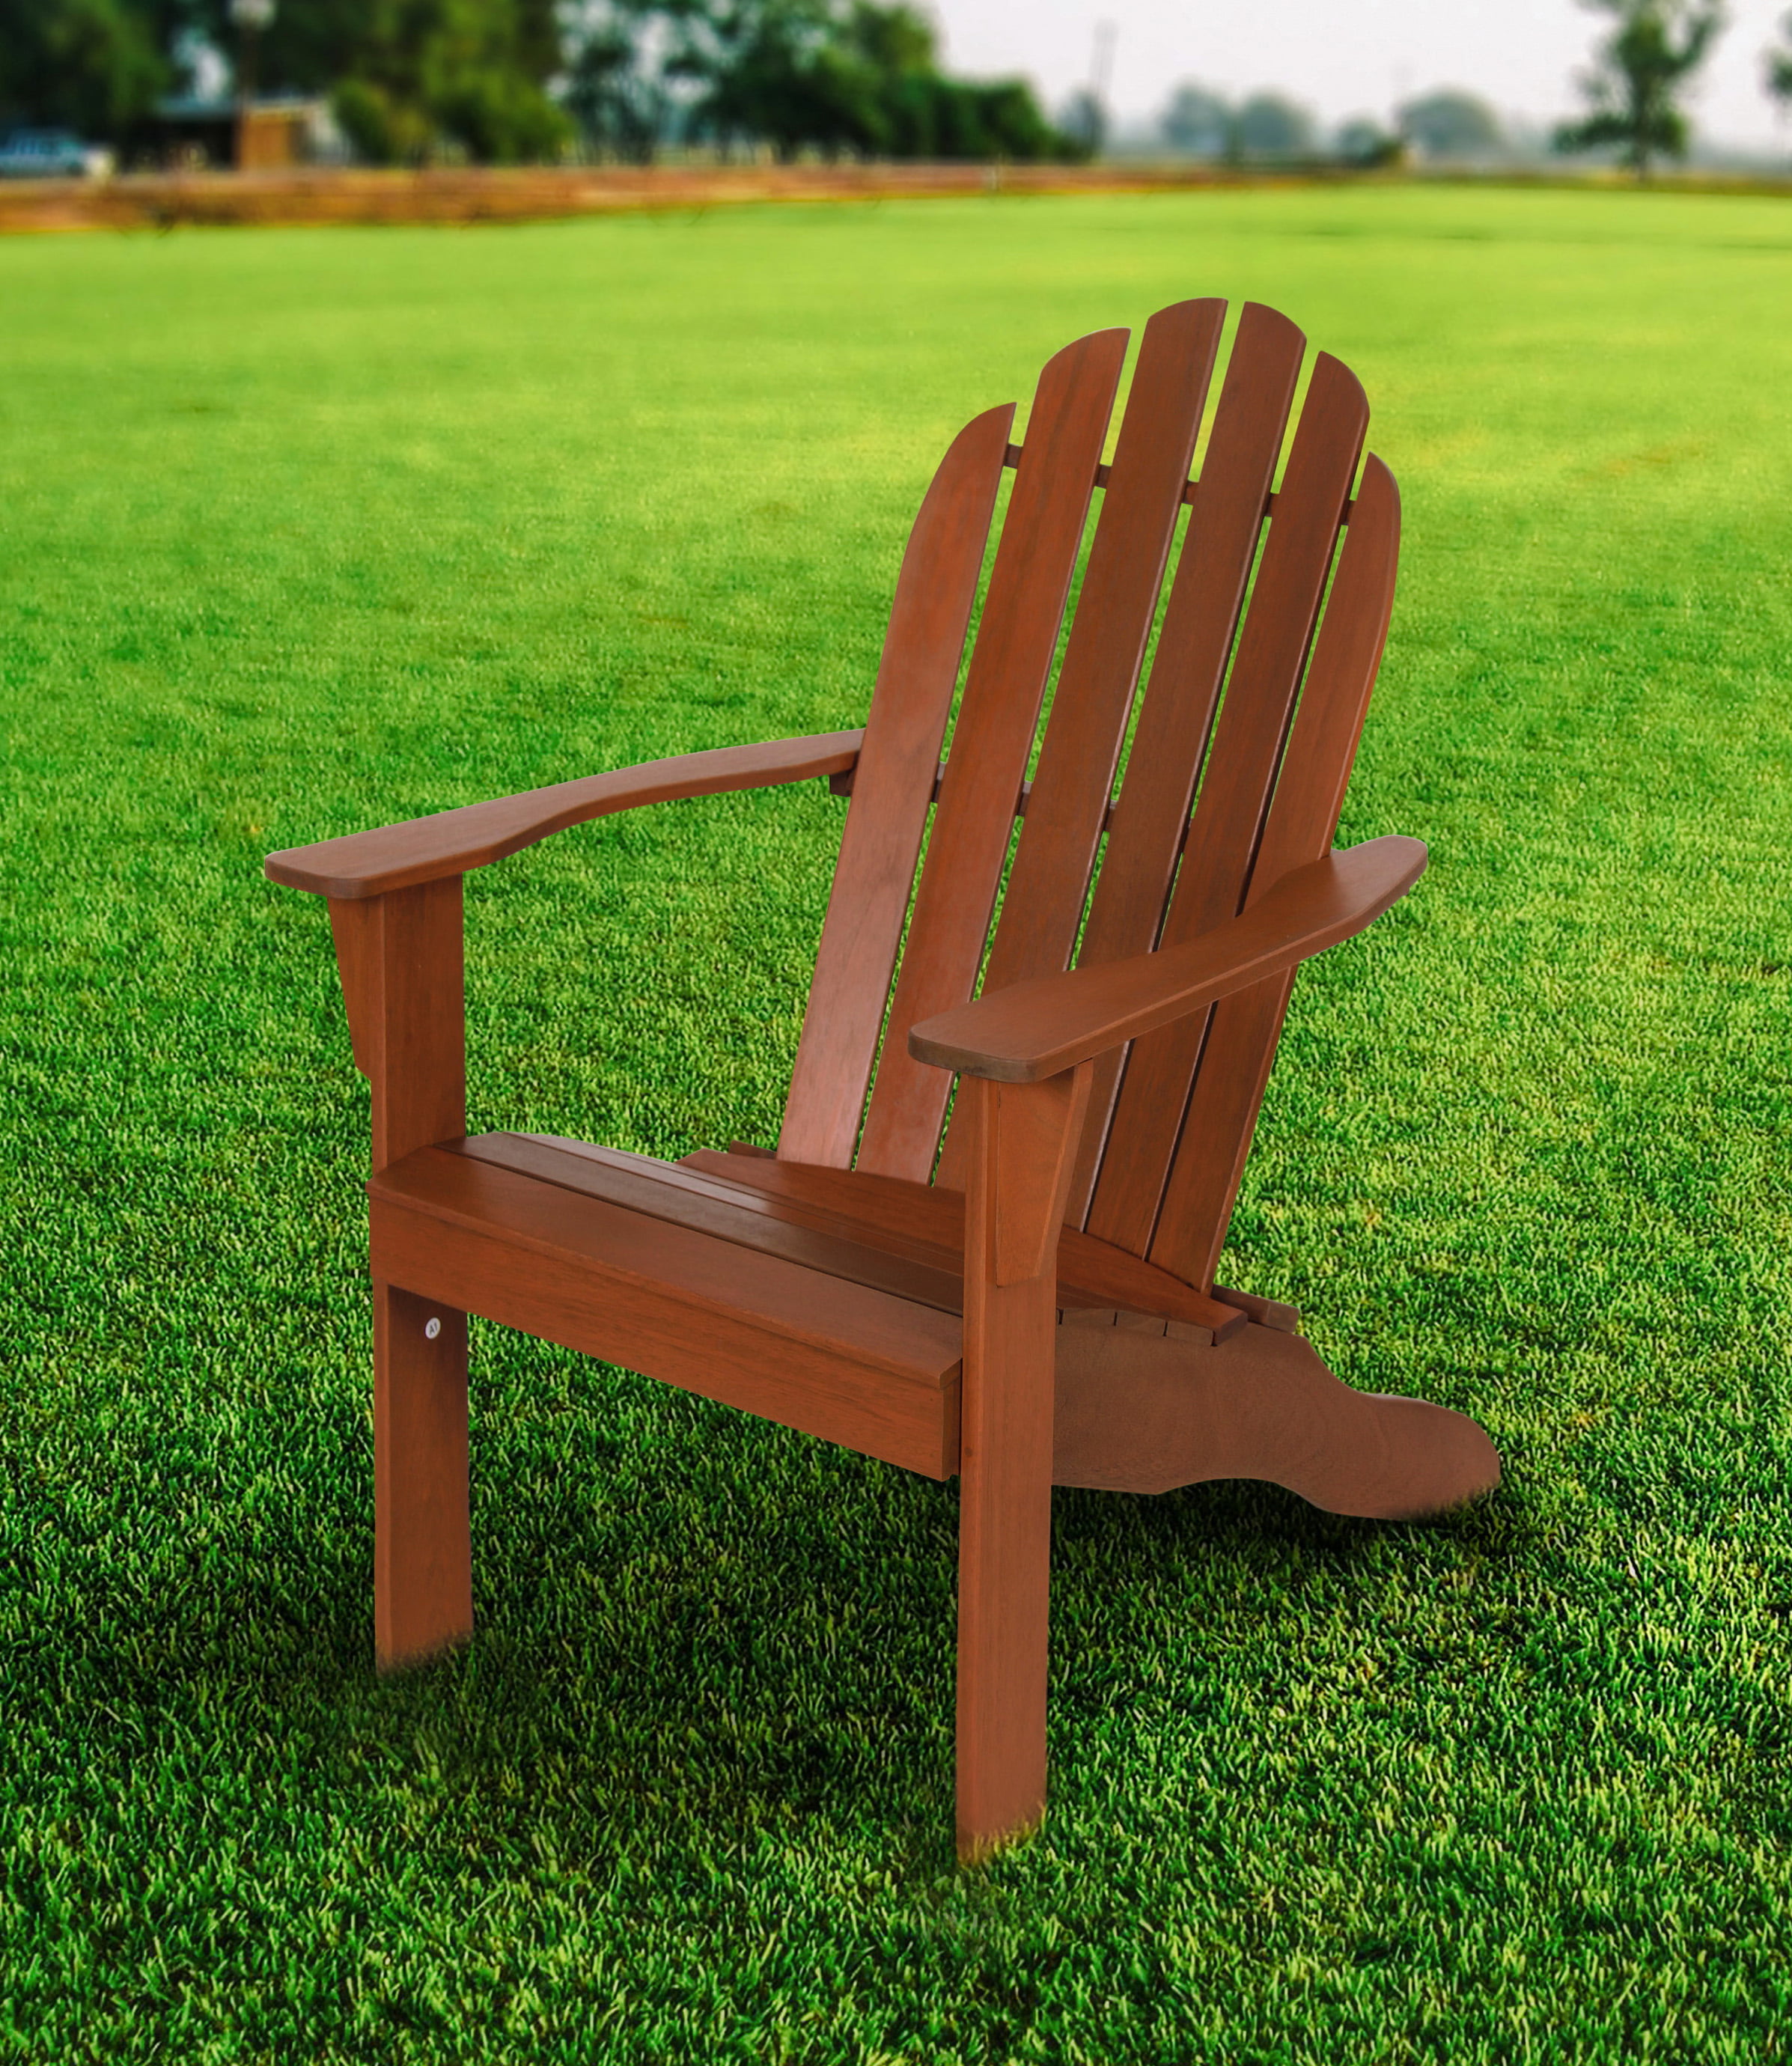 Mainstays Wood Outdoor Adirondack Chair, Brown - Walmart.com